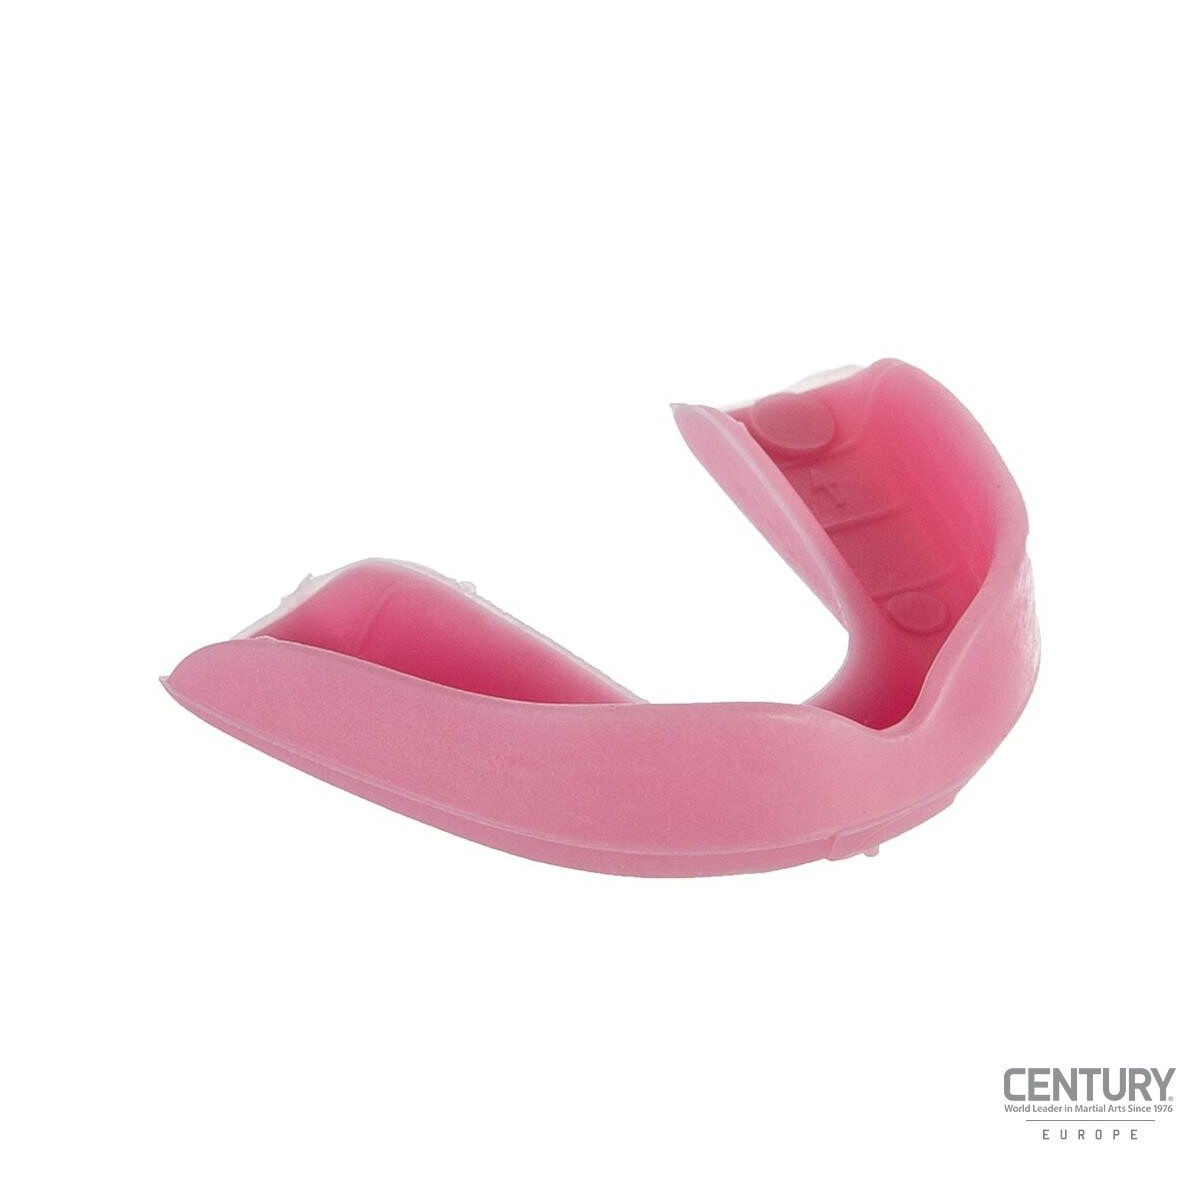 Century Single Mouthguard Pink Adult